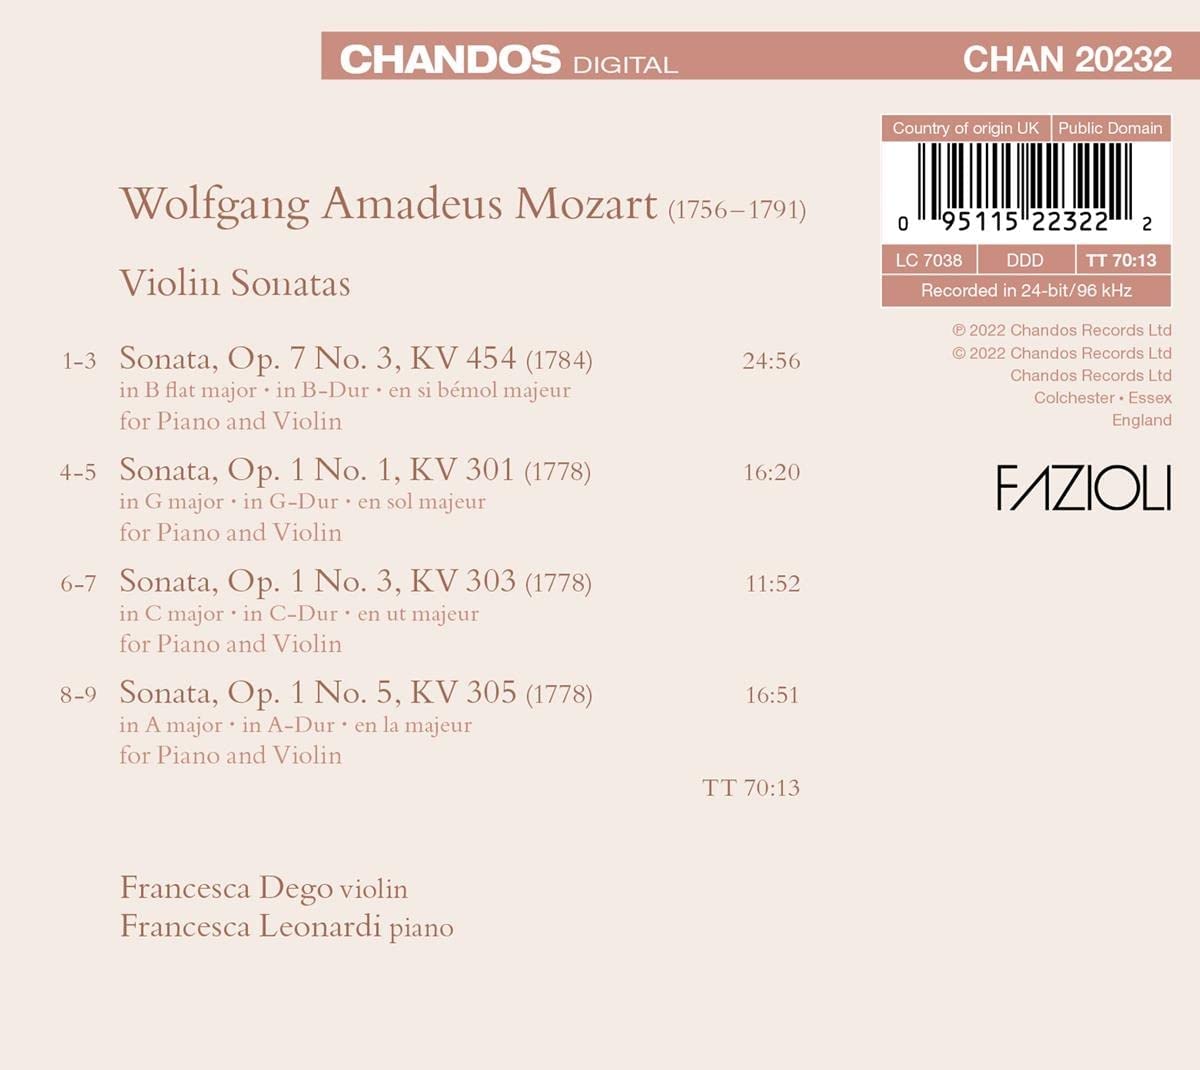 Francesca Dego 모차르트: 바이올린 소나타 1집 -  18, 20, 22, 32번 (Mozart: Violin Sonatas K.301, K.303, K.305, K.454)